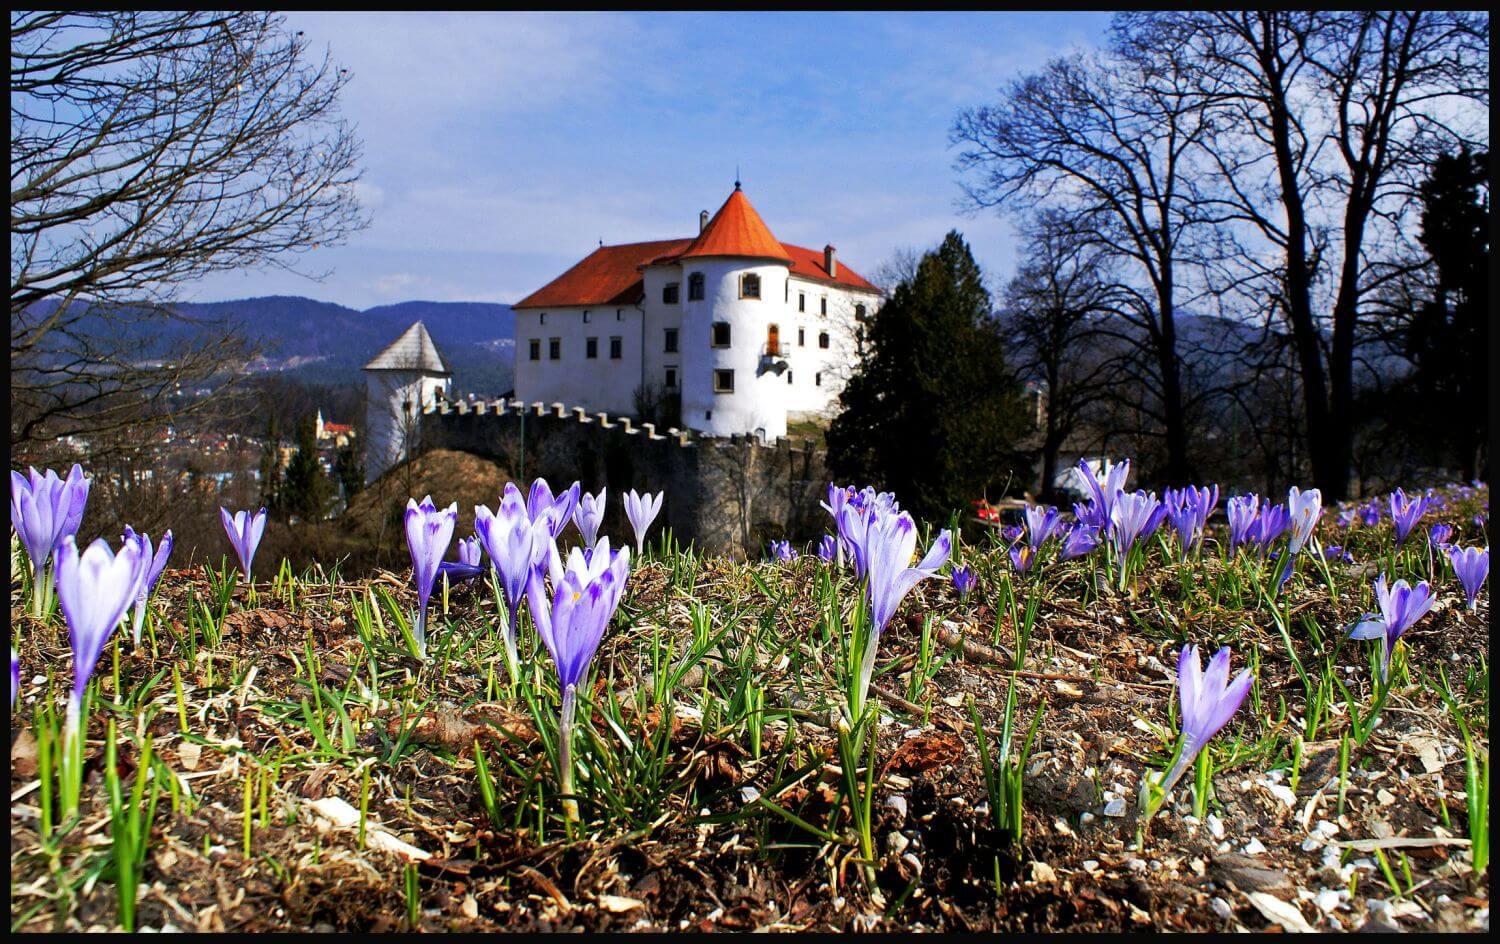 The Velenje Castle